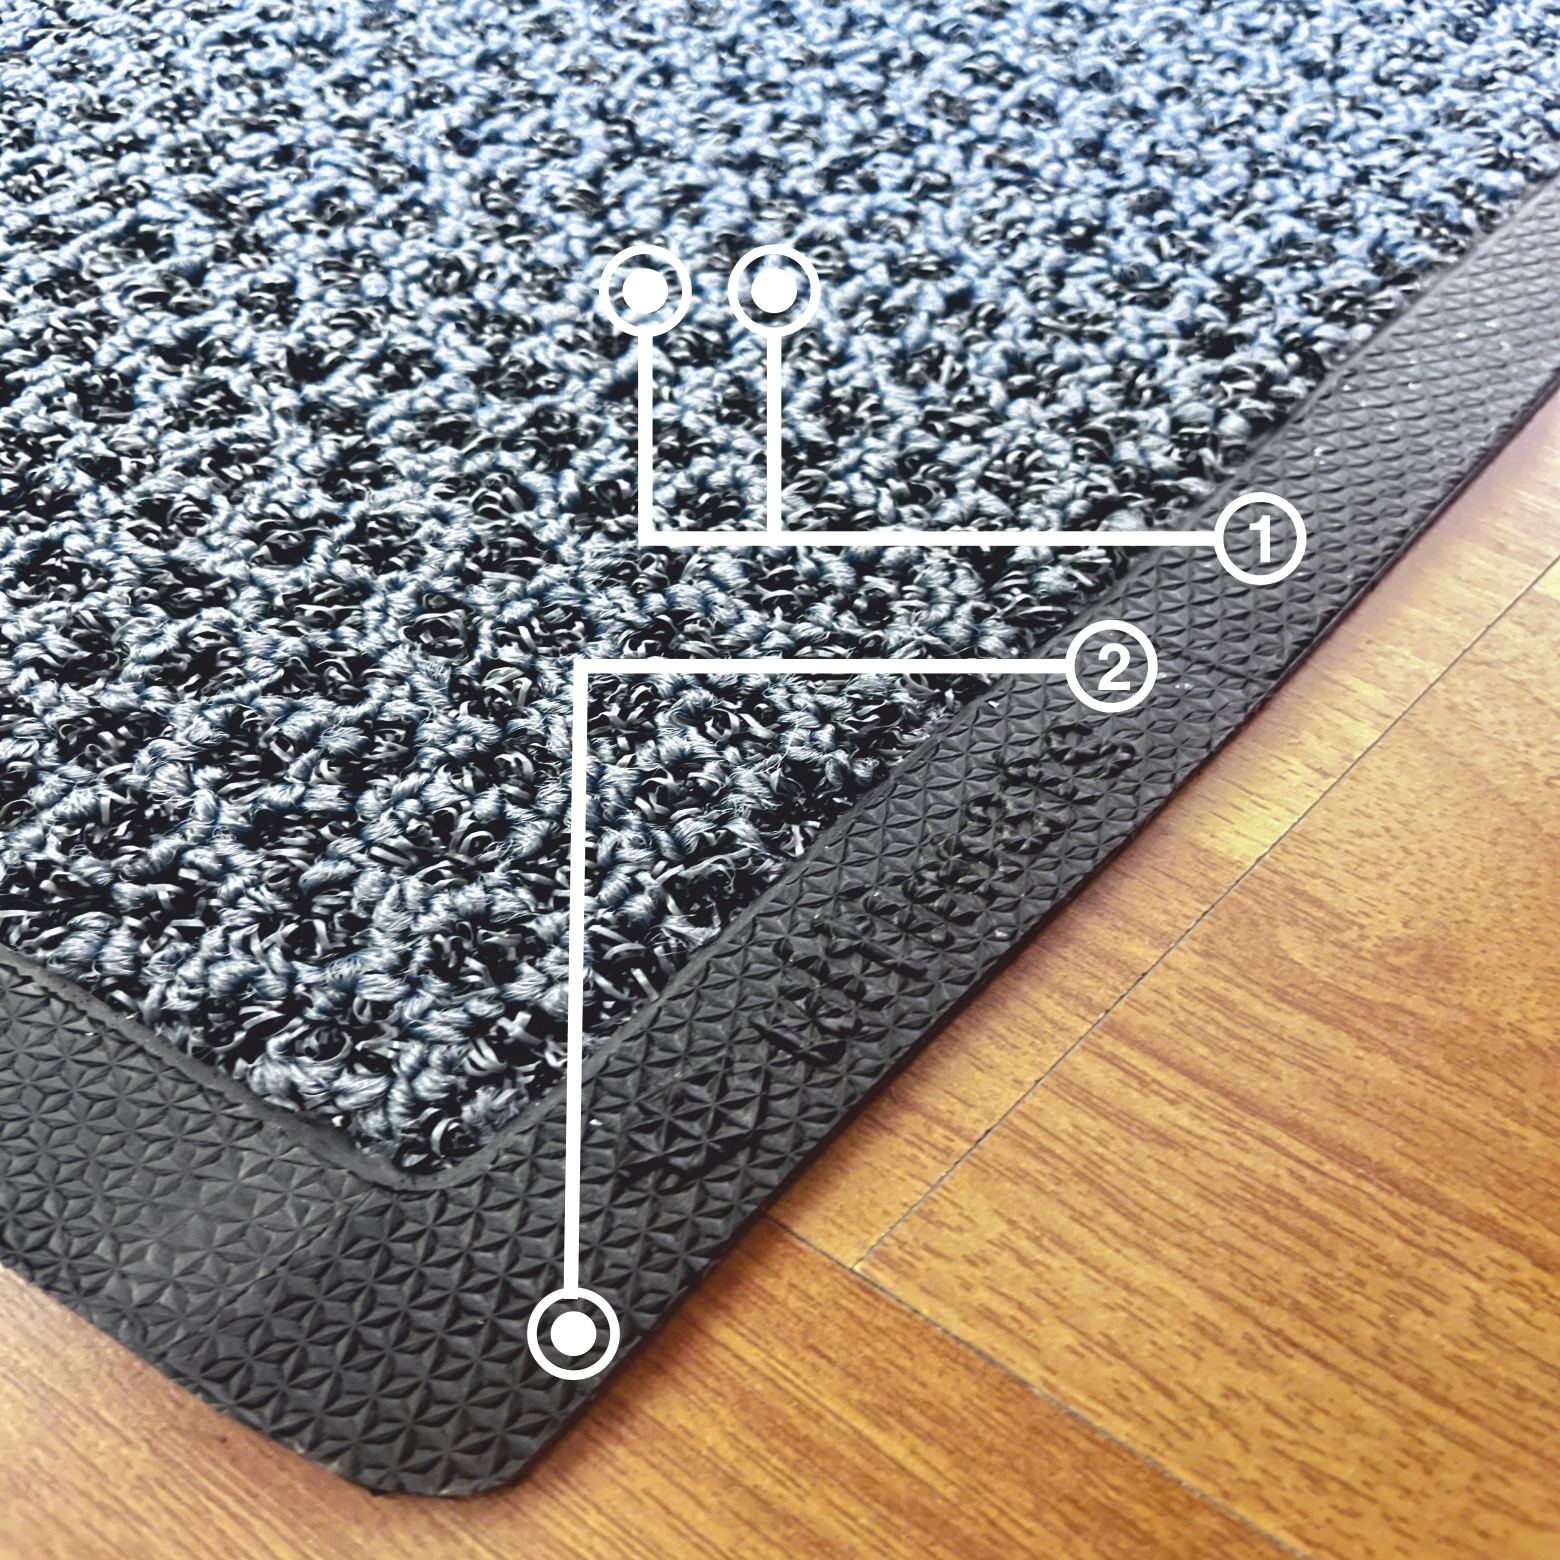 UltiScrub Scraper Dryer matting features by Ultimats